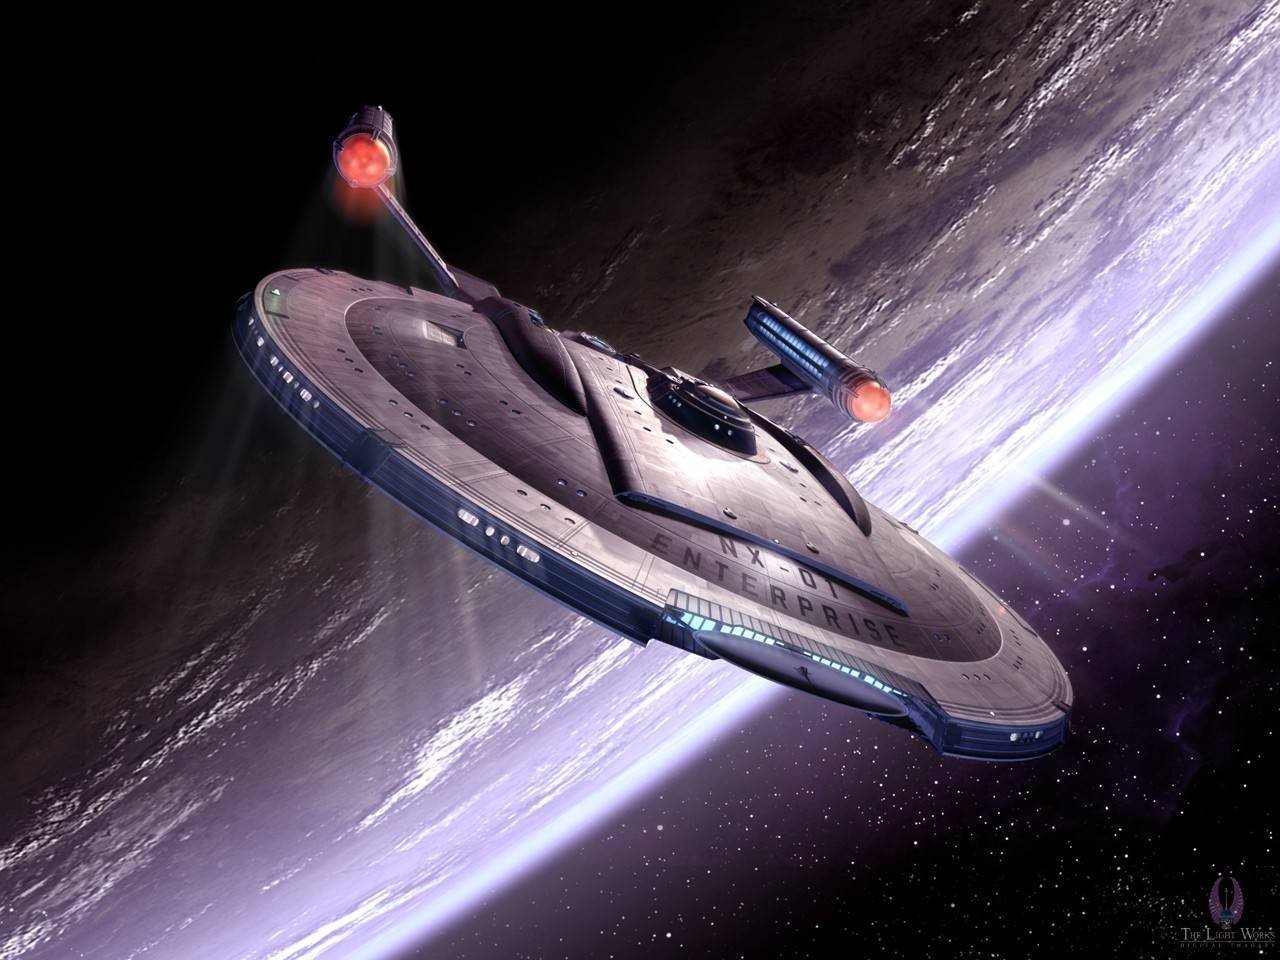 NX 01 Enterprise - Star Trek - Enterprise Wallpaper 3999077 - Fanpop